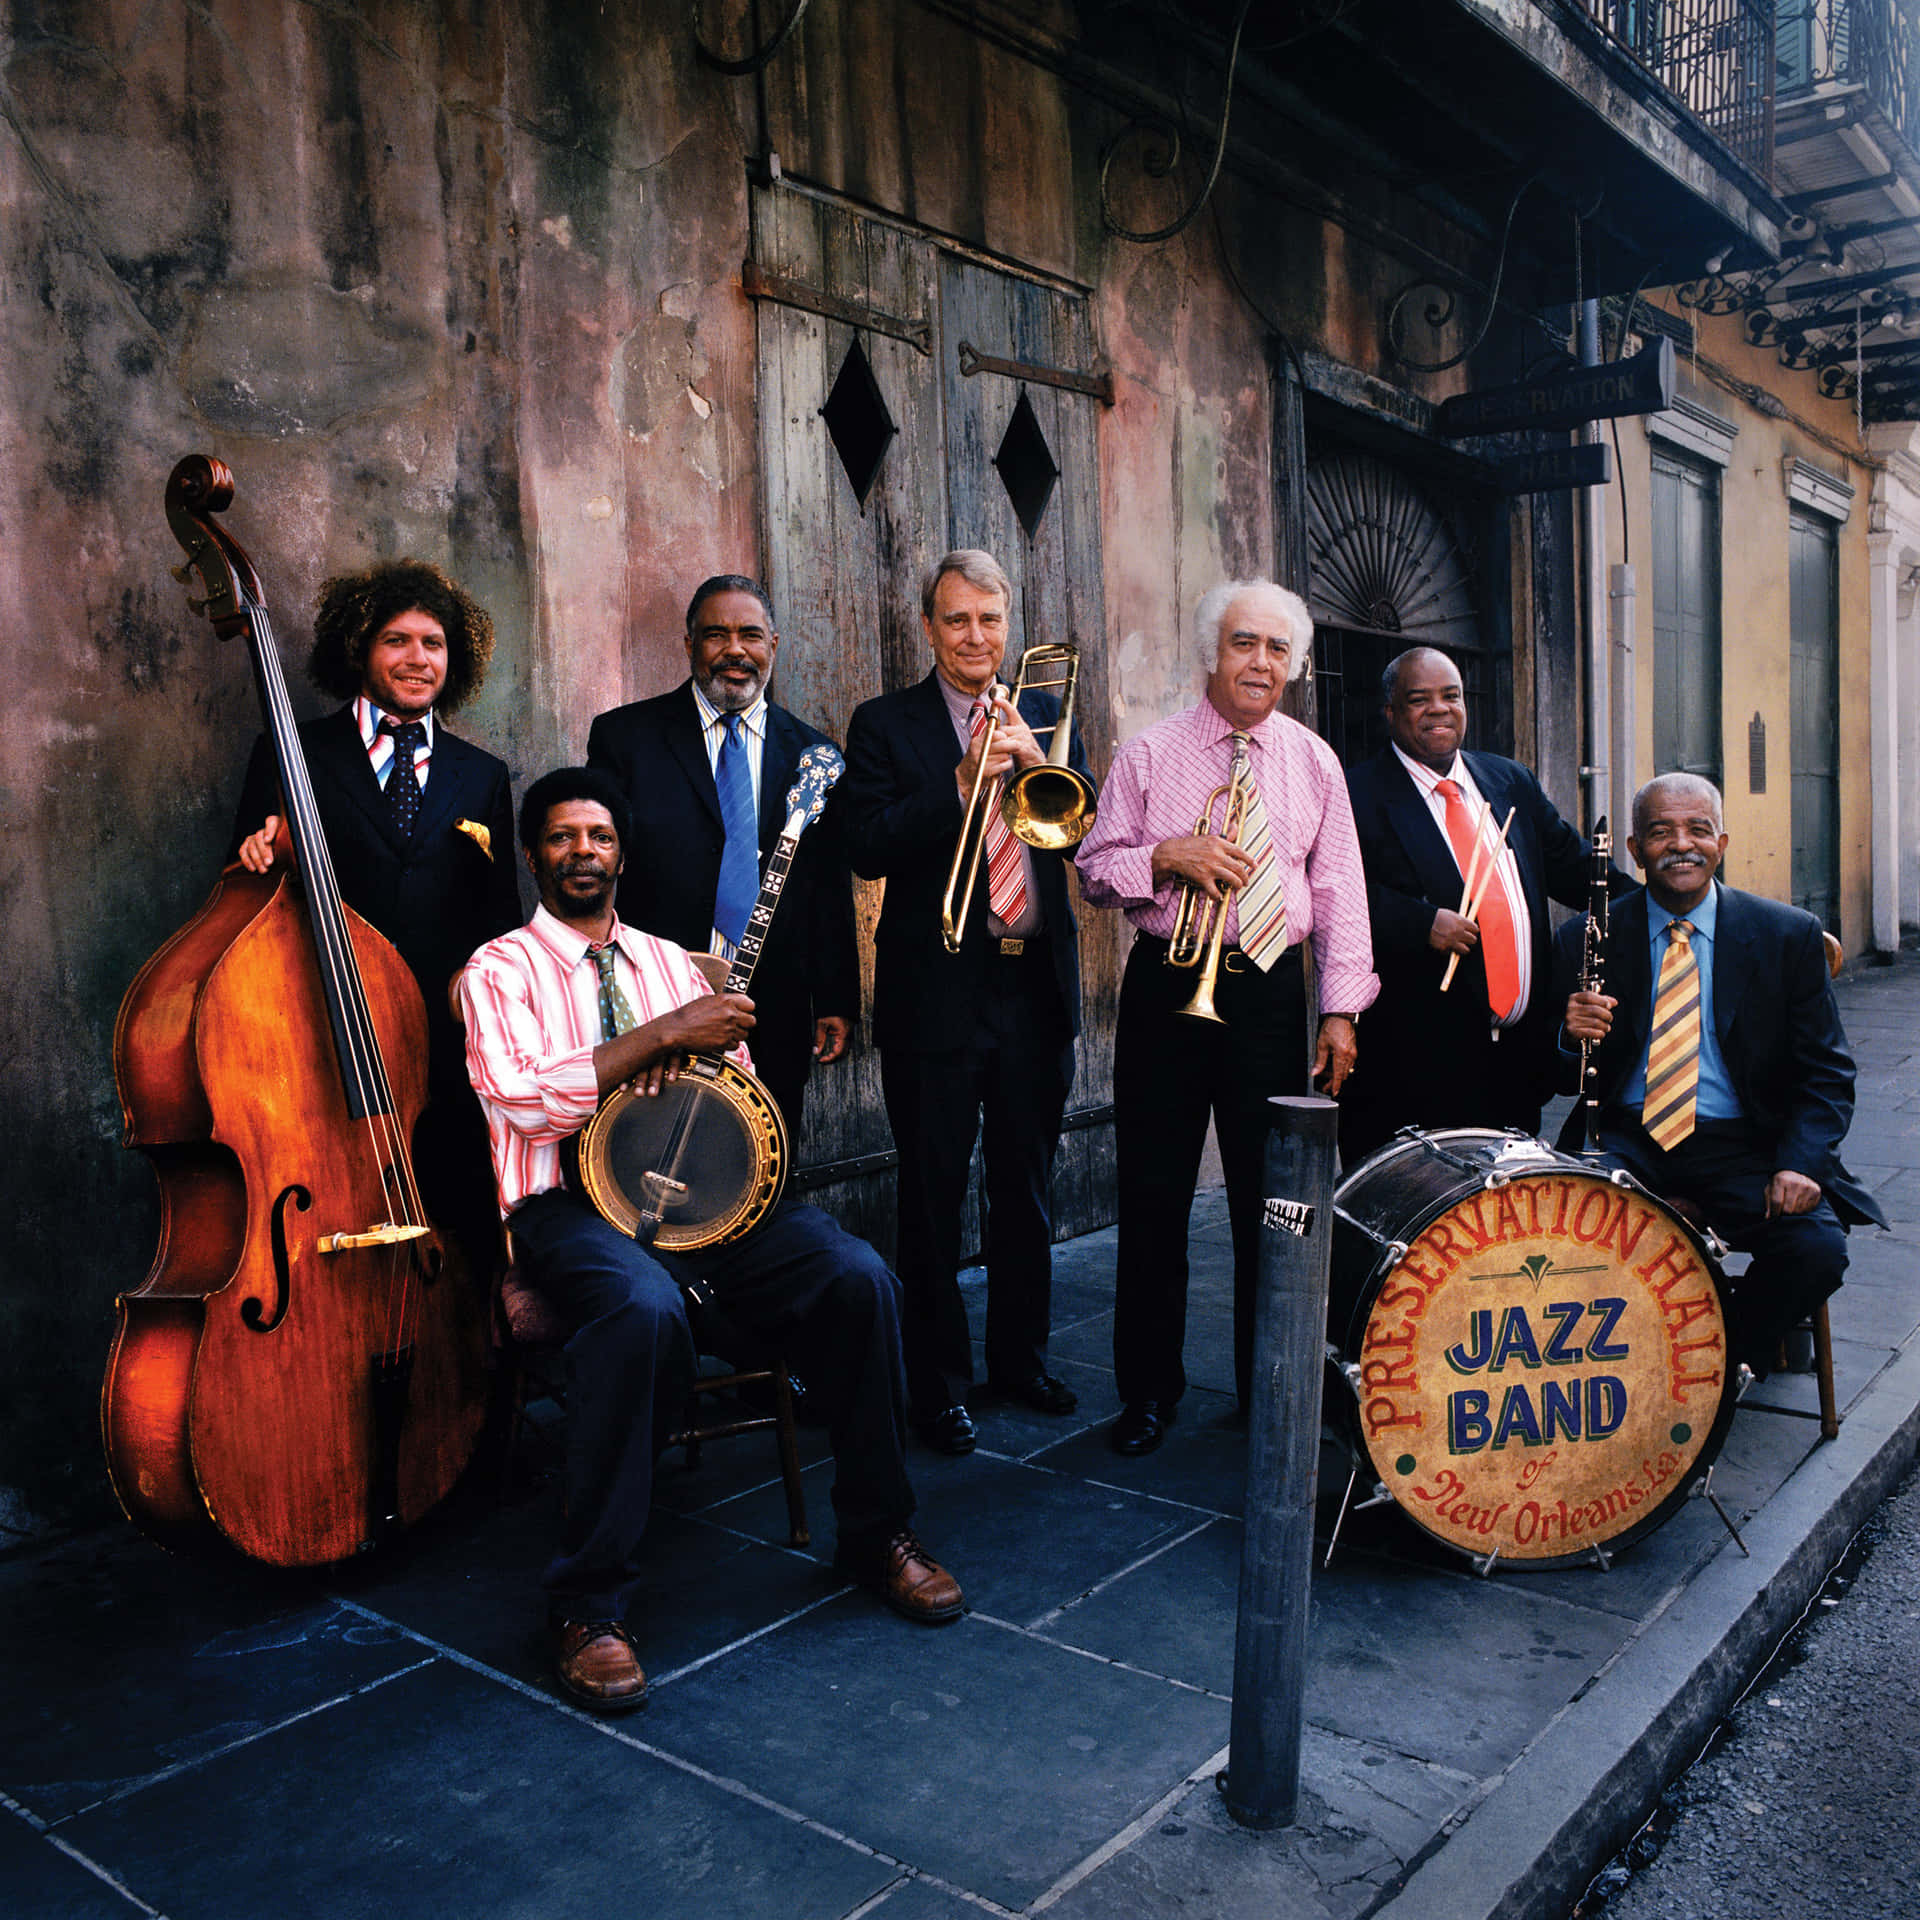 Песни джаз банды. Preservation Hall Jazz Band. Американский джаз бэнд. Джаз бэнд новый Орлеан 20е годы арт. Джаз-Бенд или джаз-бэнд.